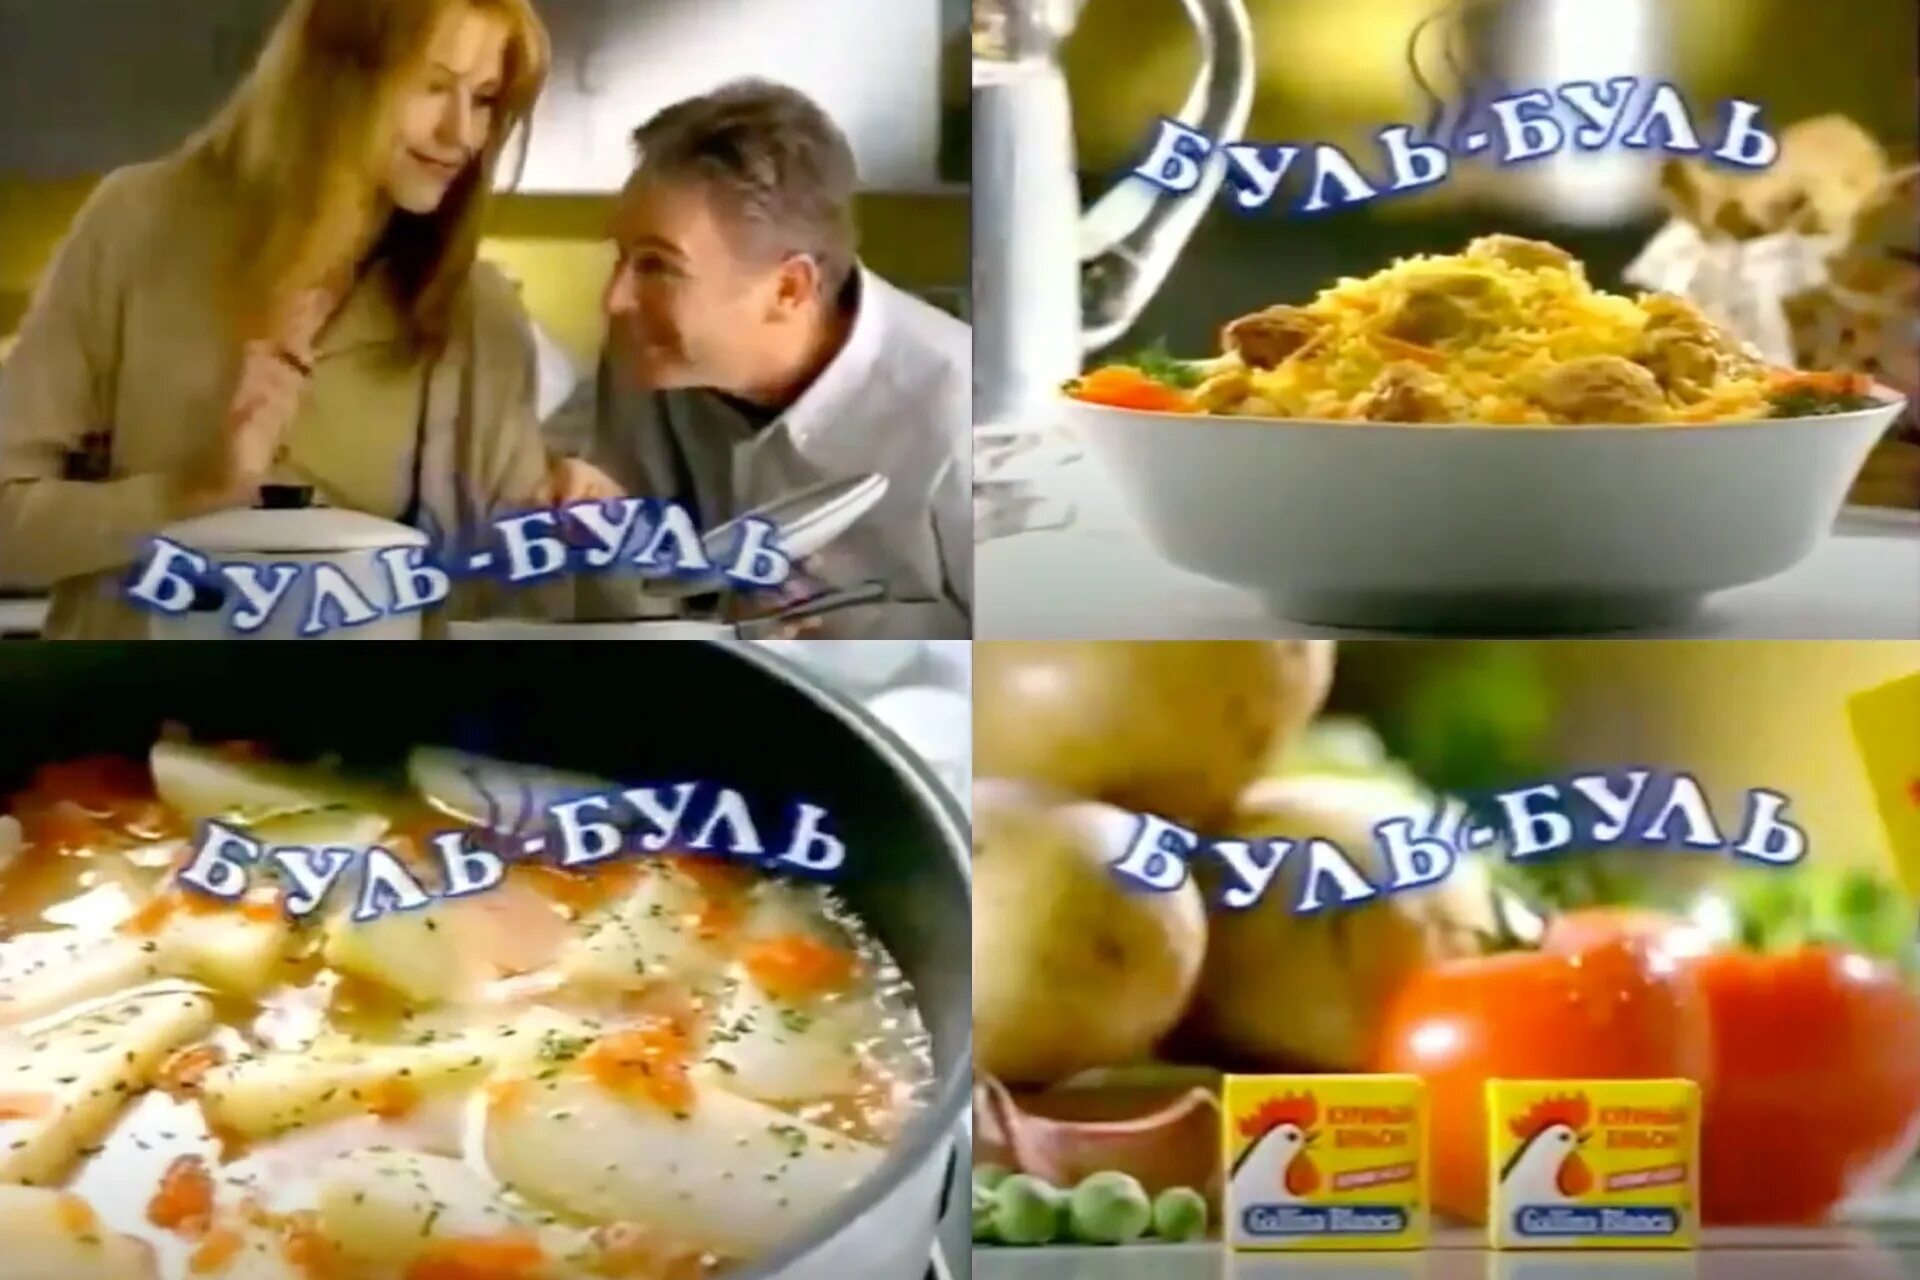 Реклама 90 х россия